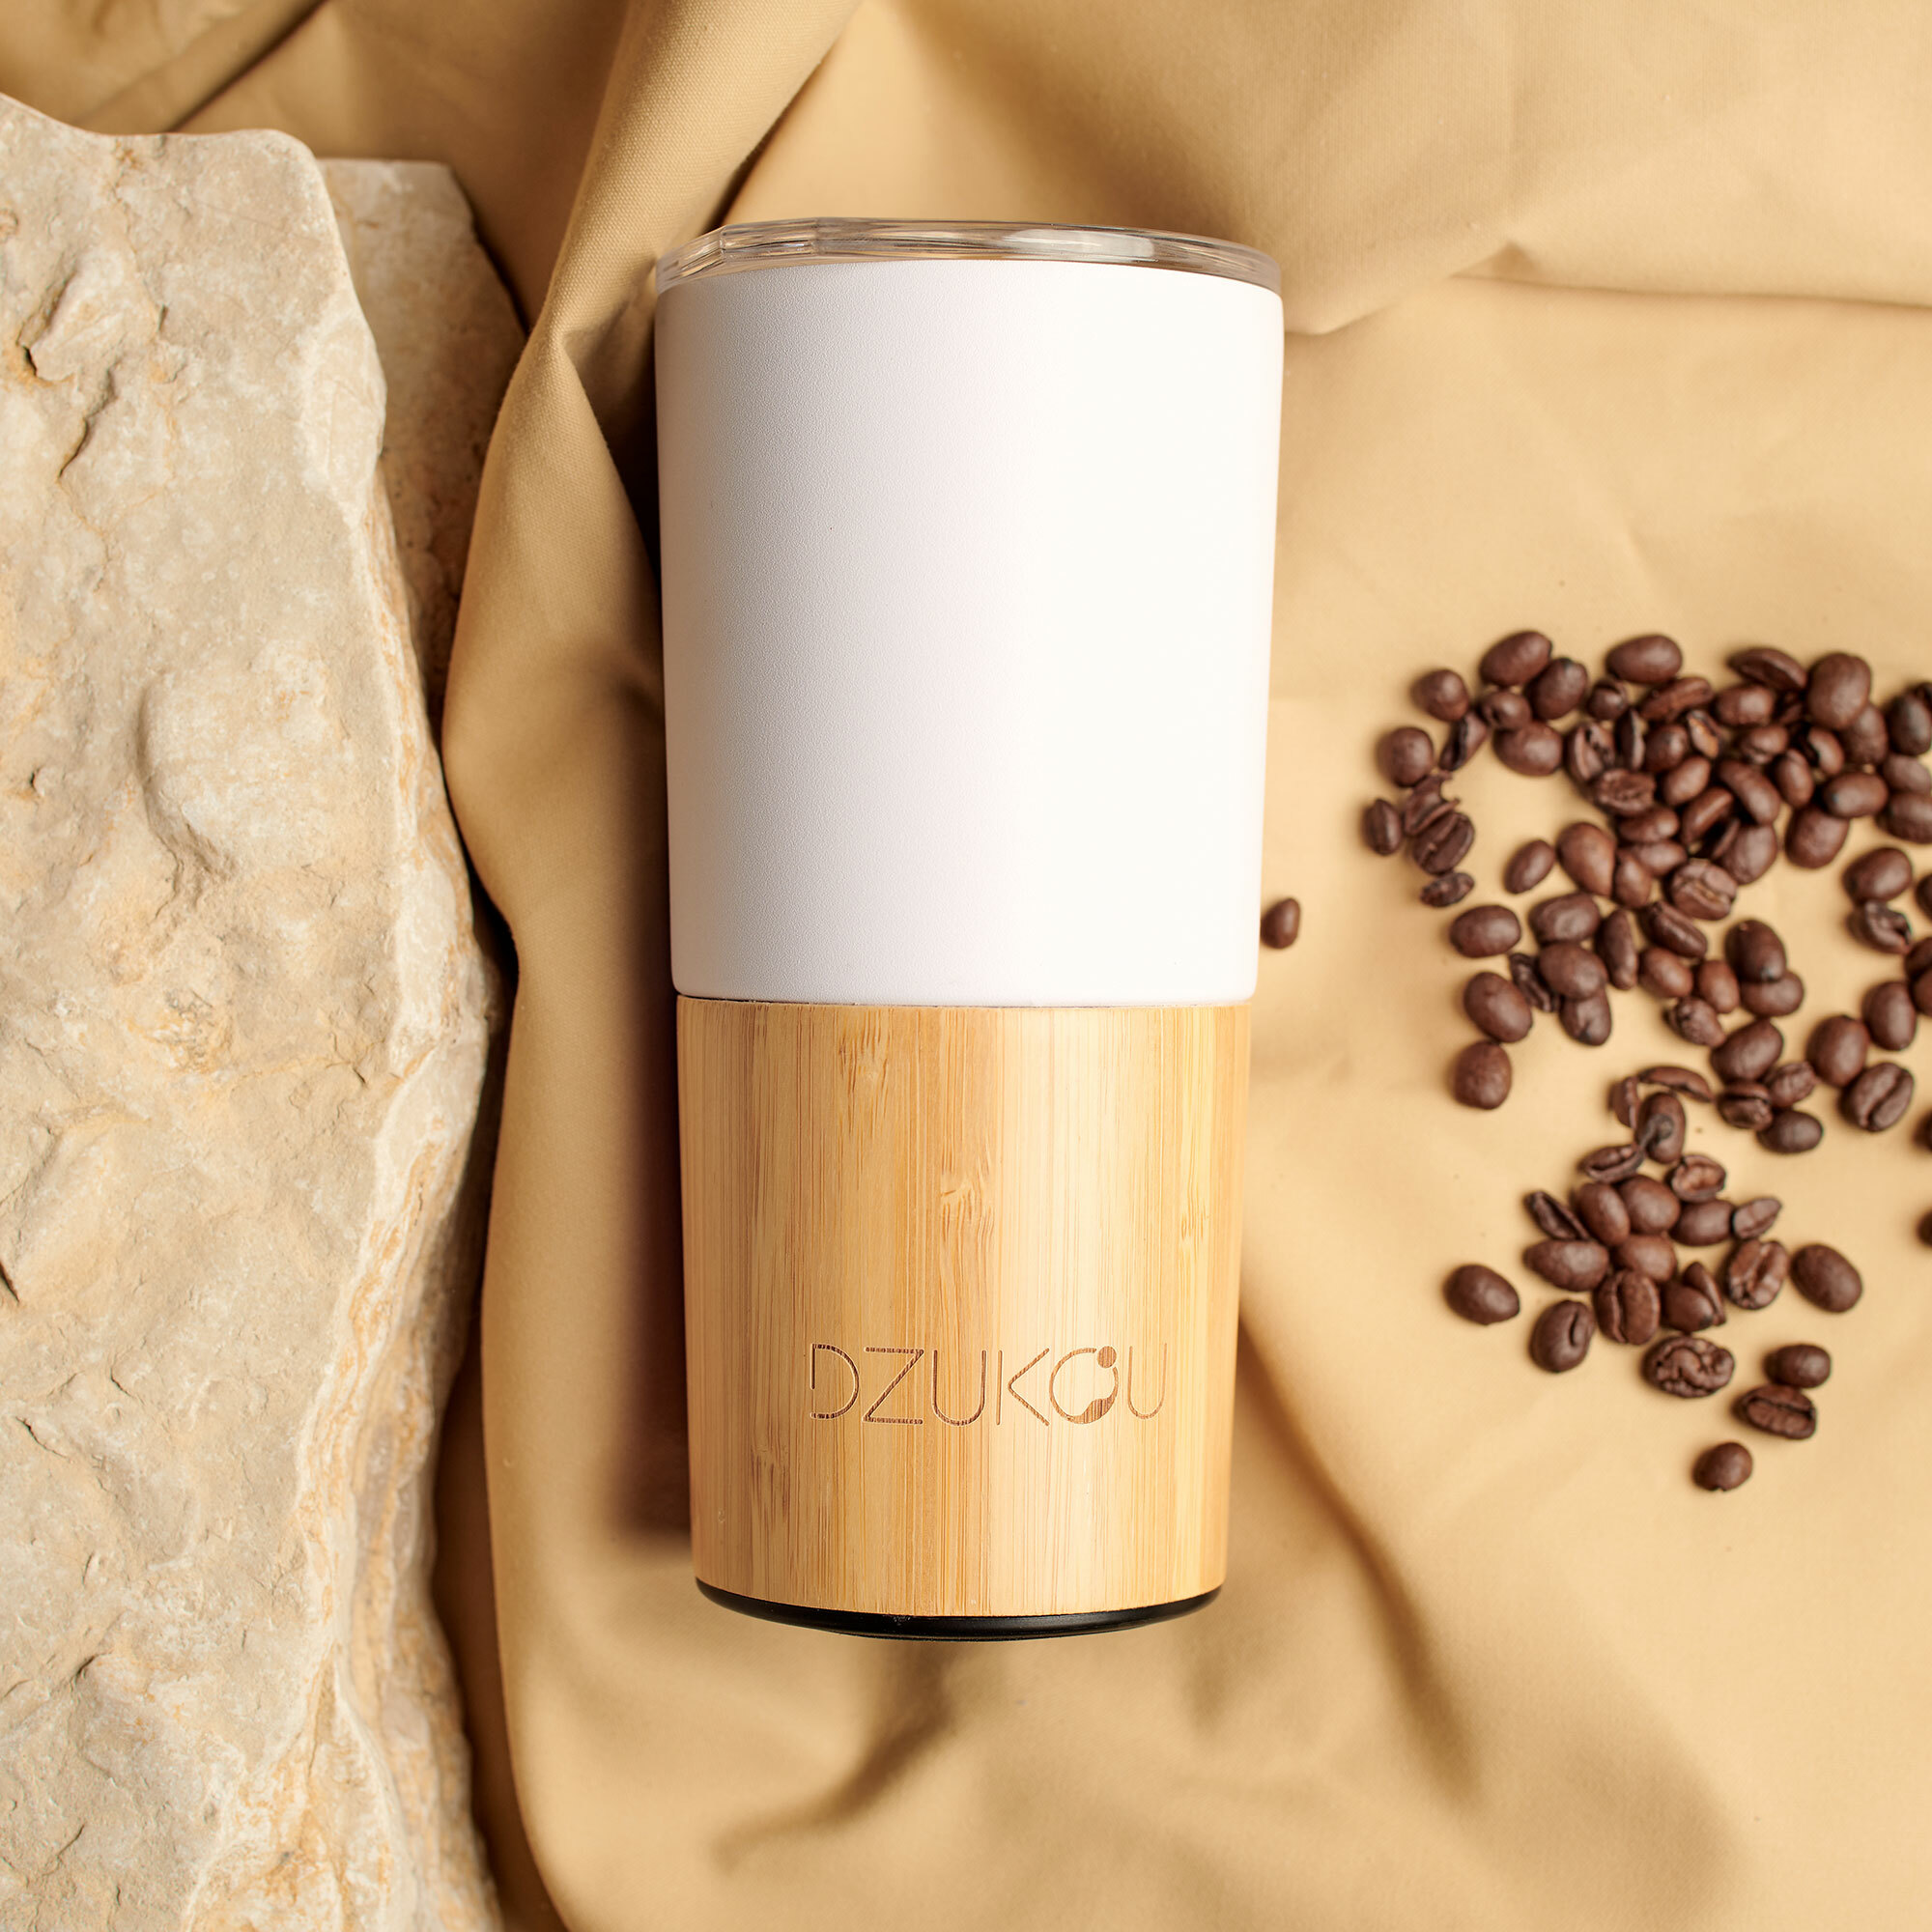 Dzukou zero waste coffee travel mug bamboo